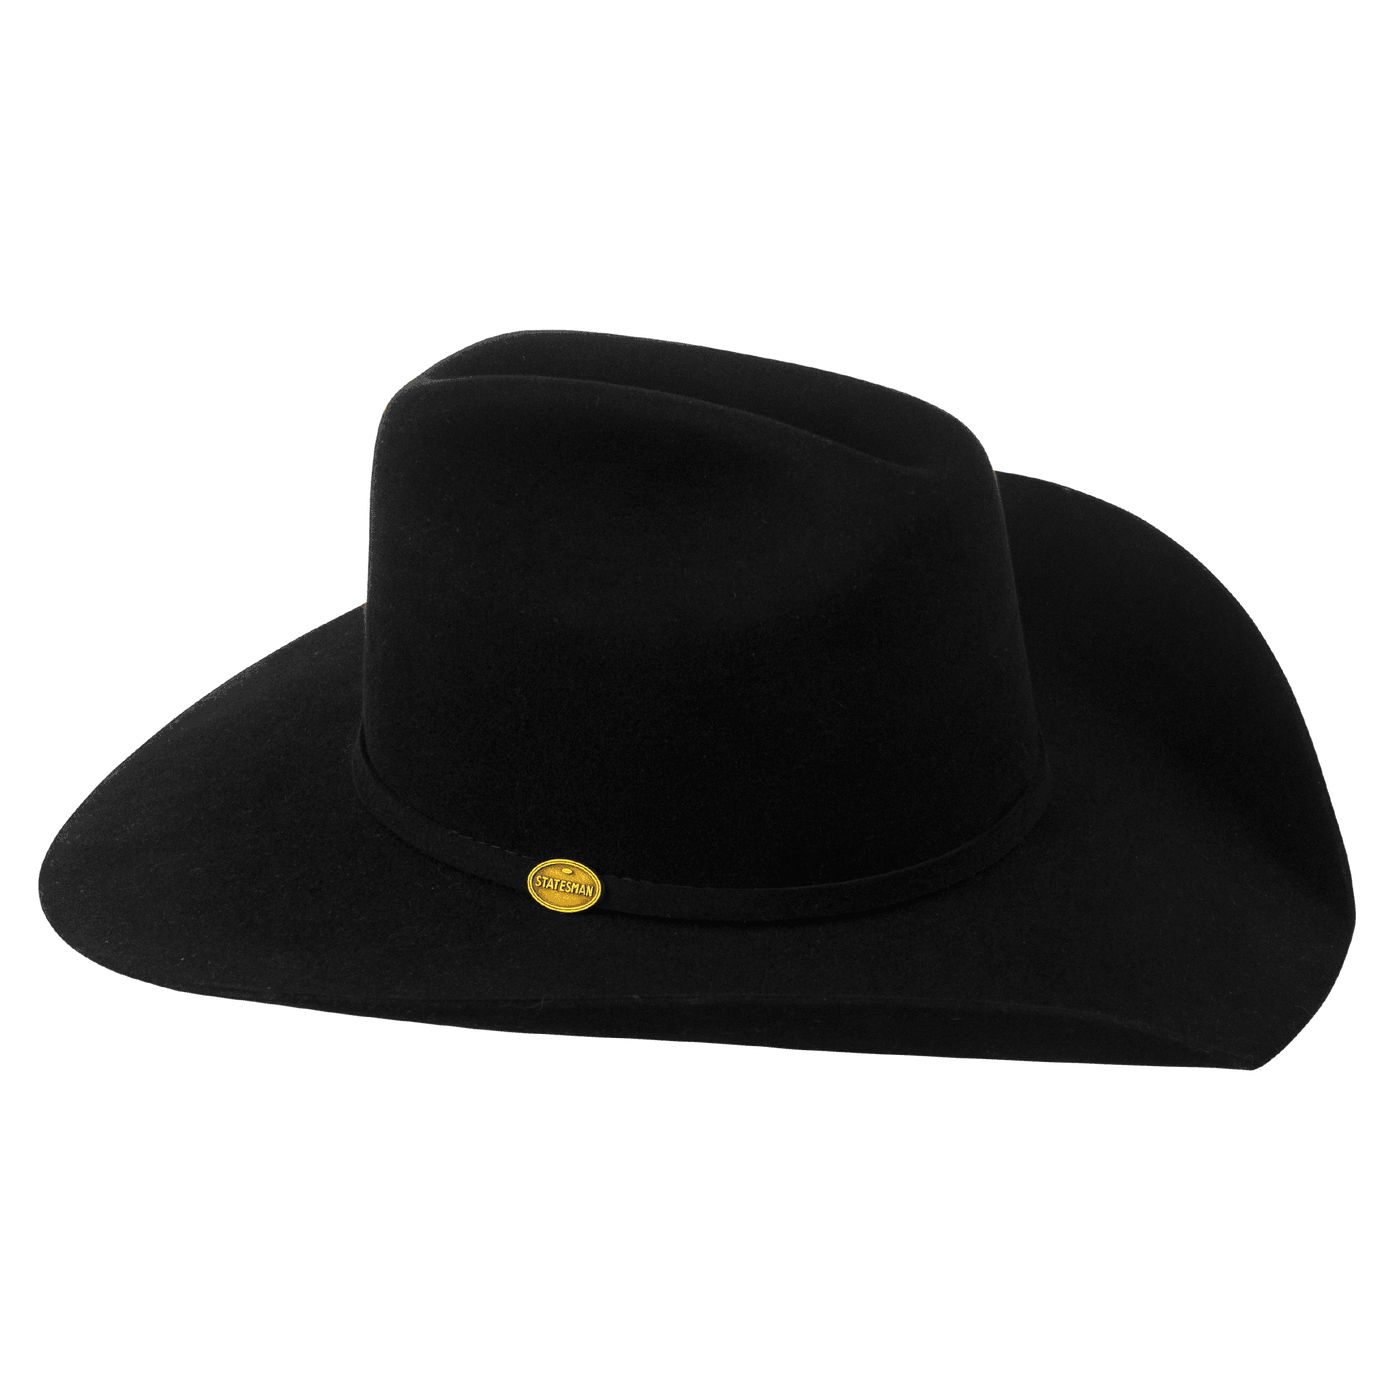 Statesman Hats | Premium Fur Felt | Great Divide | Outback Traders ...